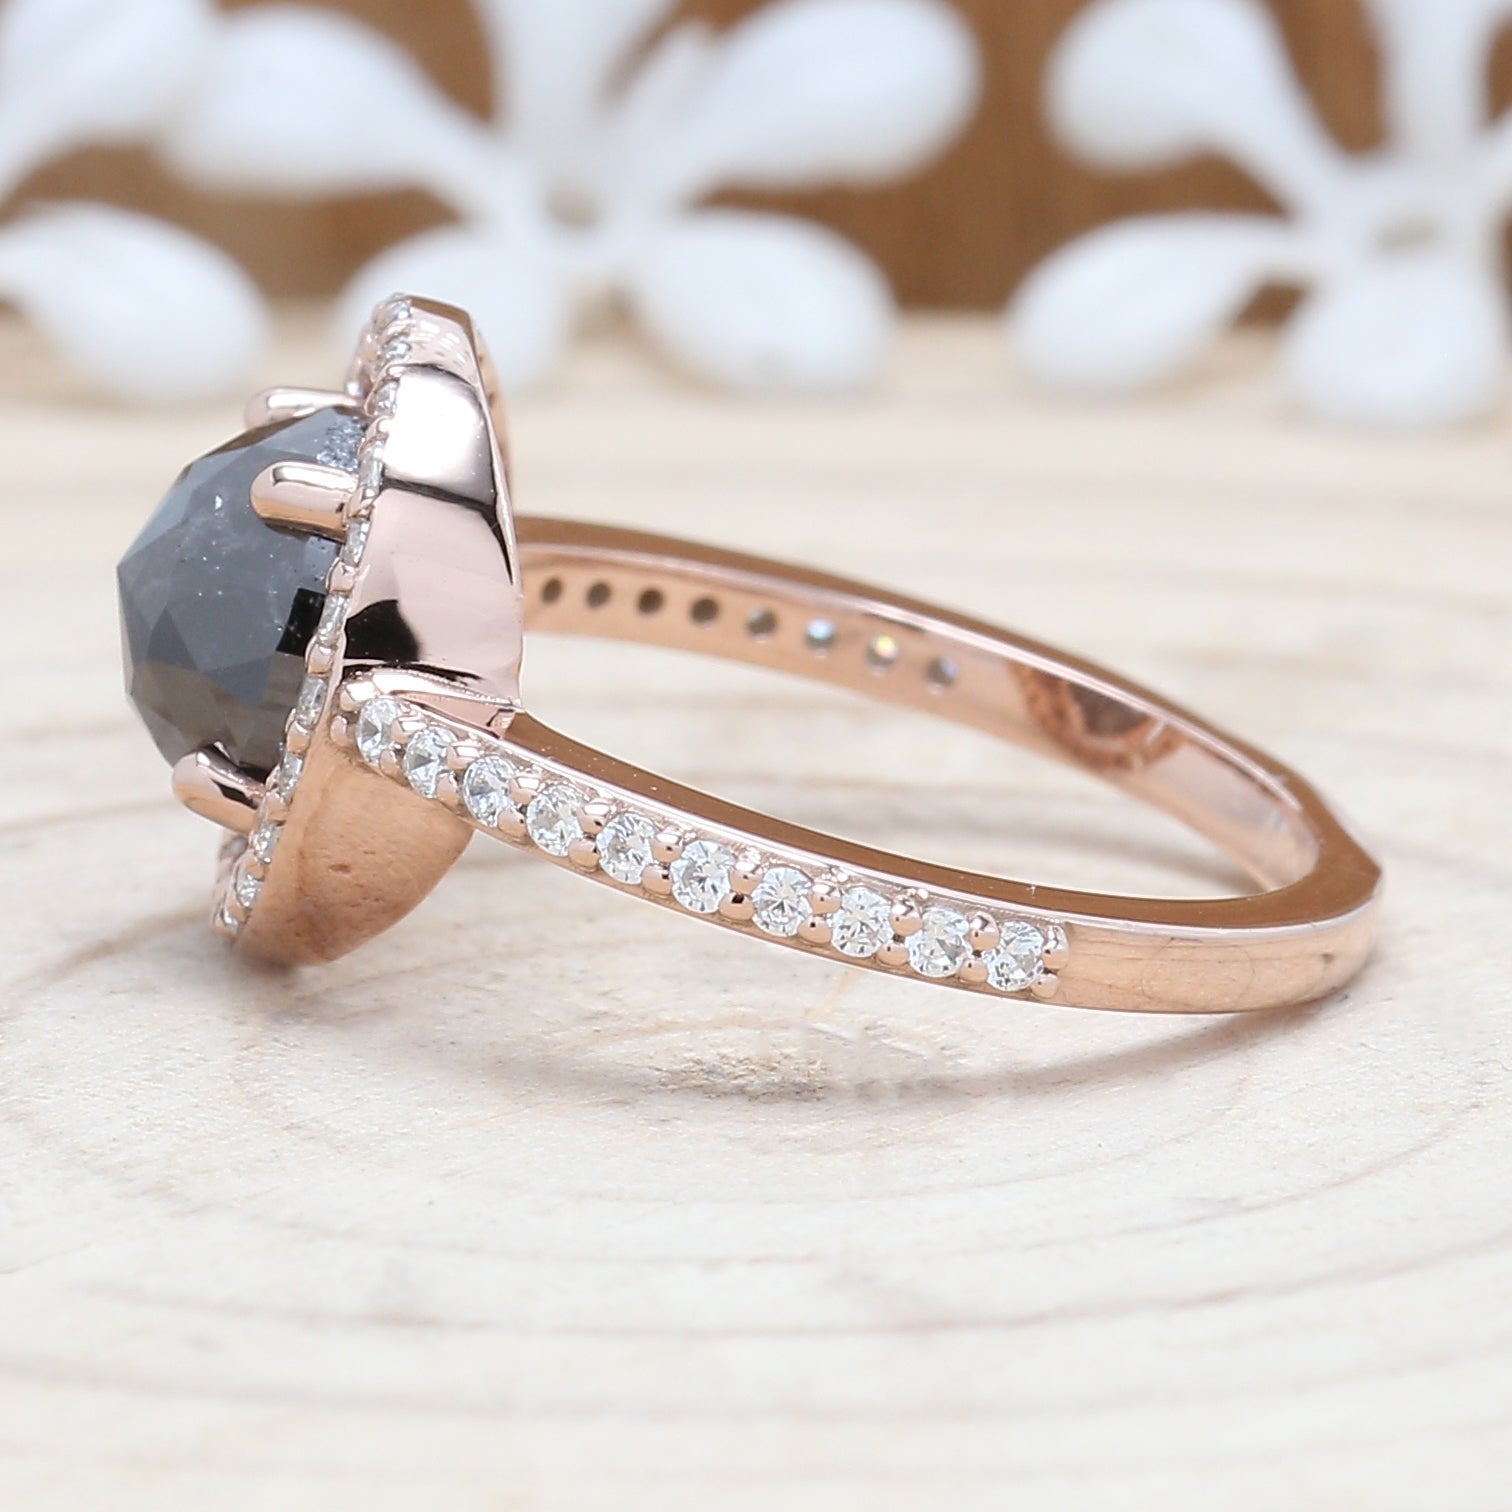 Black Oval Diamond 14K Solid Rose White Yellow Gold Ring Engagement Wedding Gift Ring KDK1713